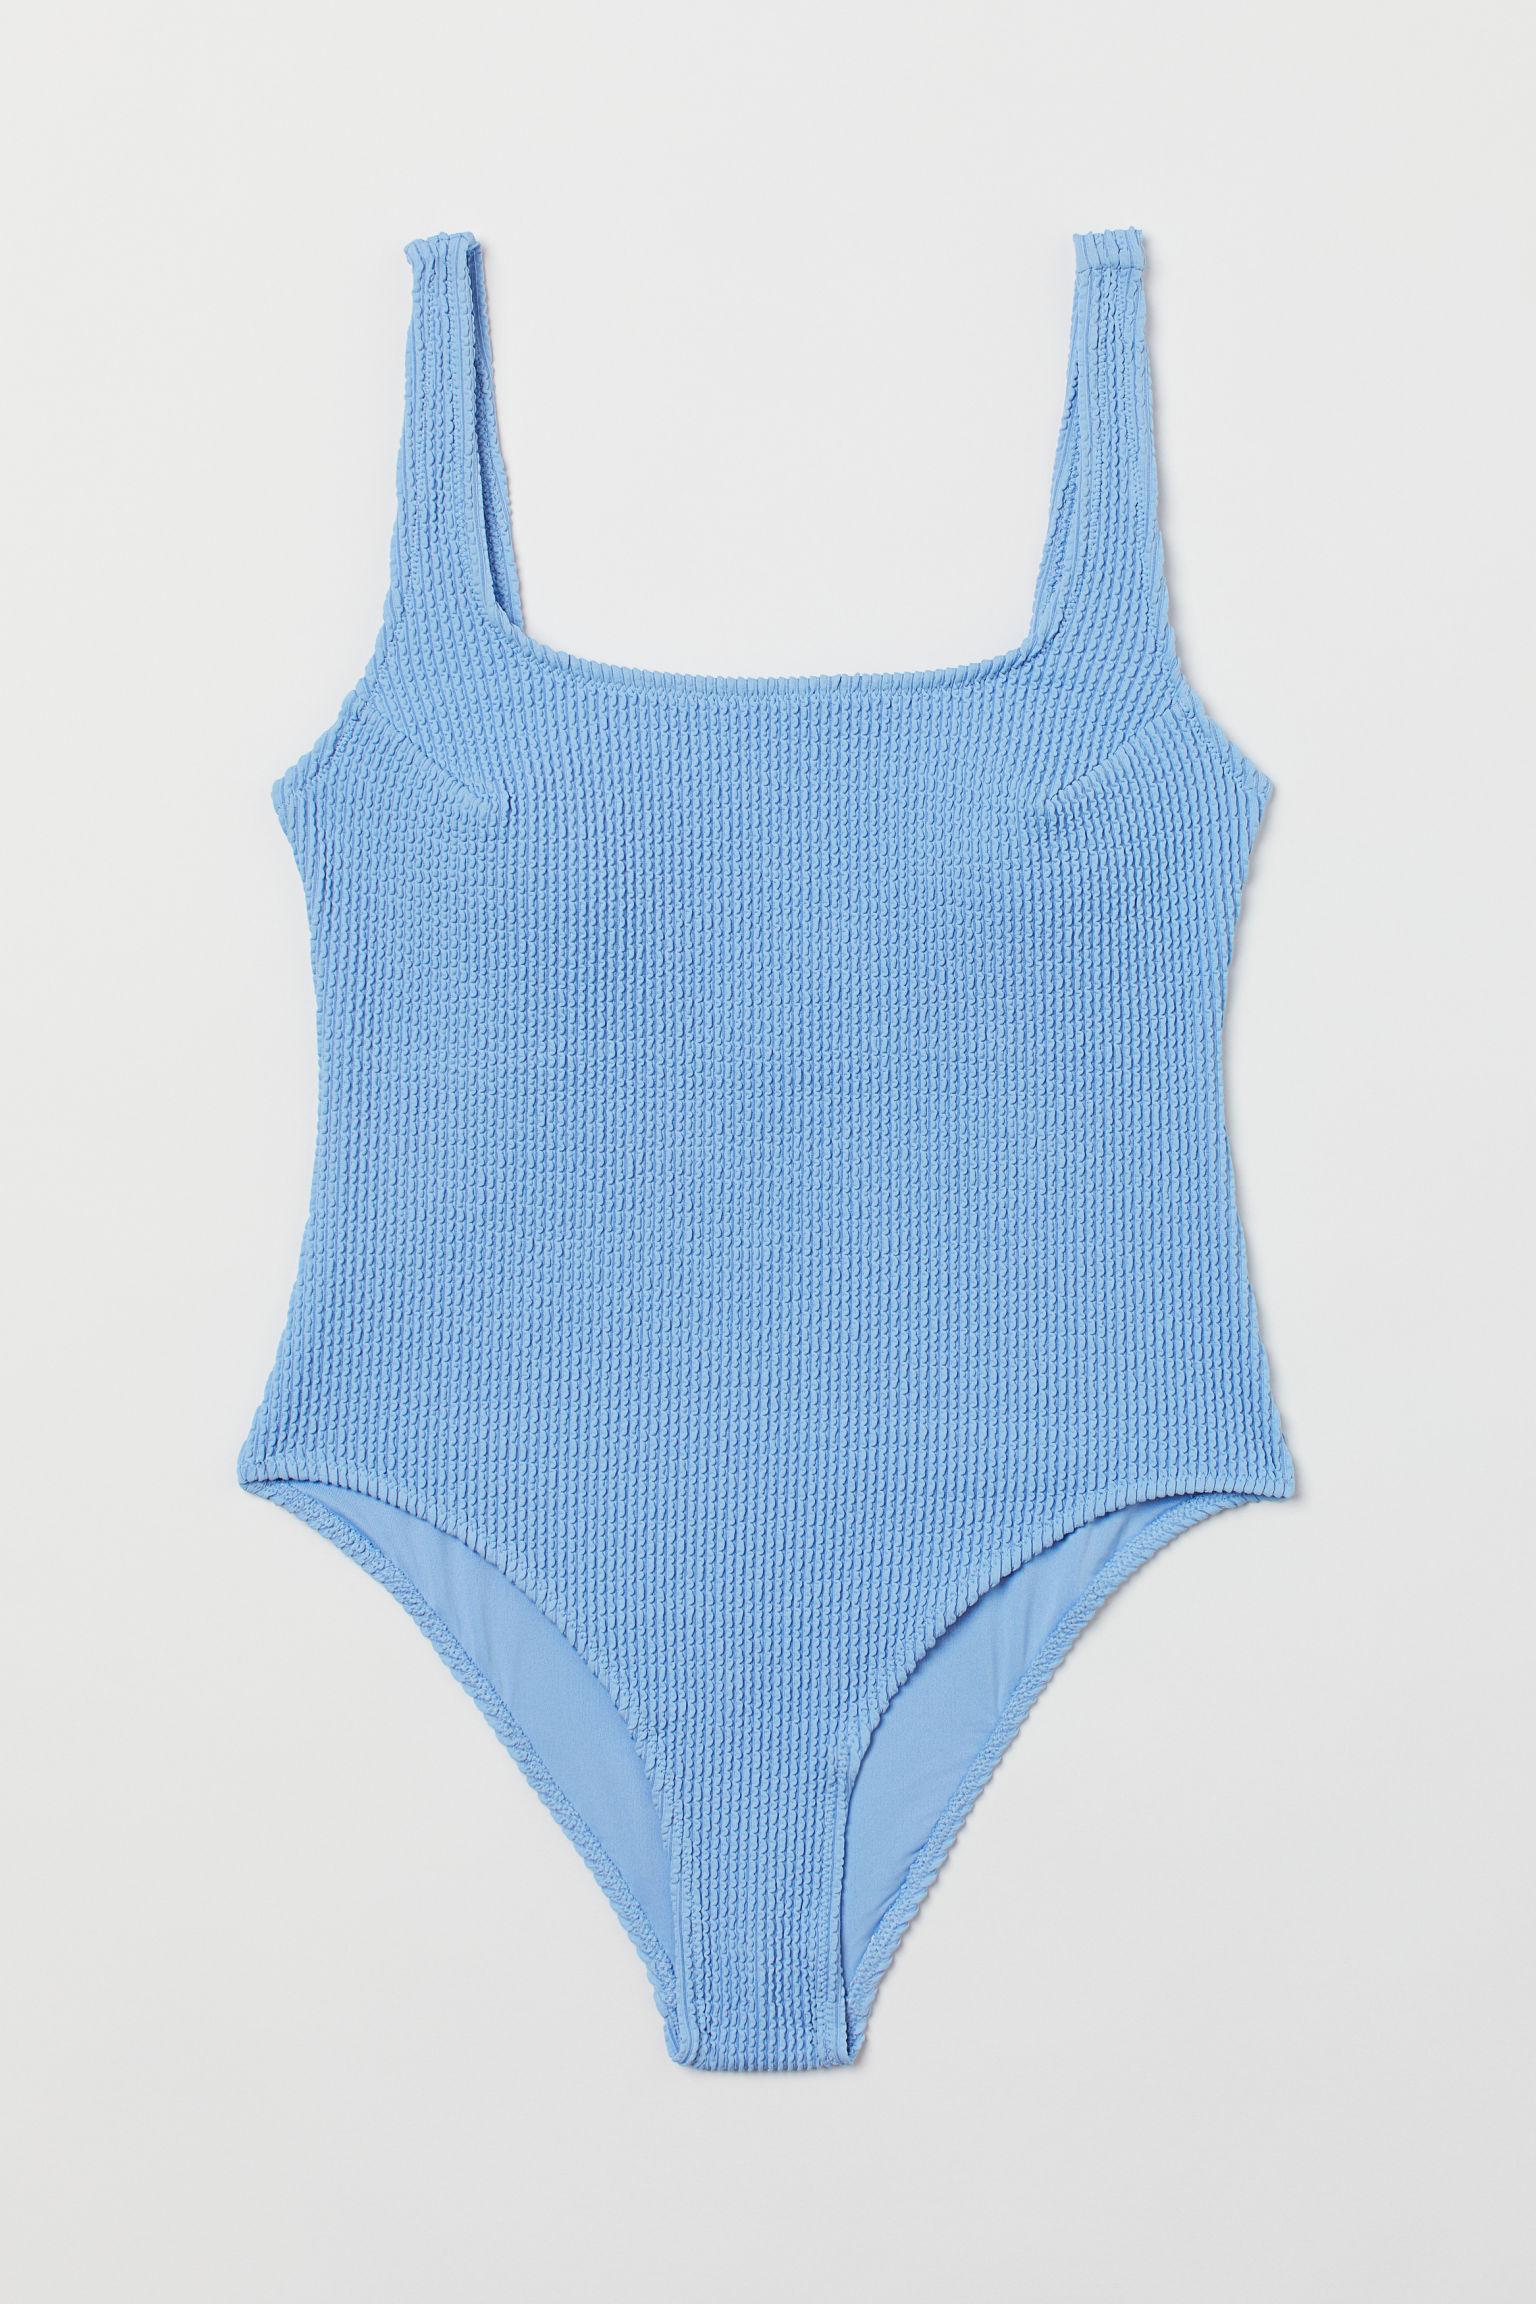 H&M High Leg Swimsuit in Blue | Lyst Canada